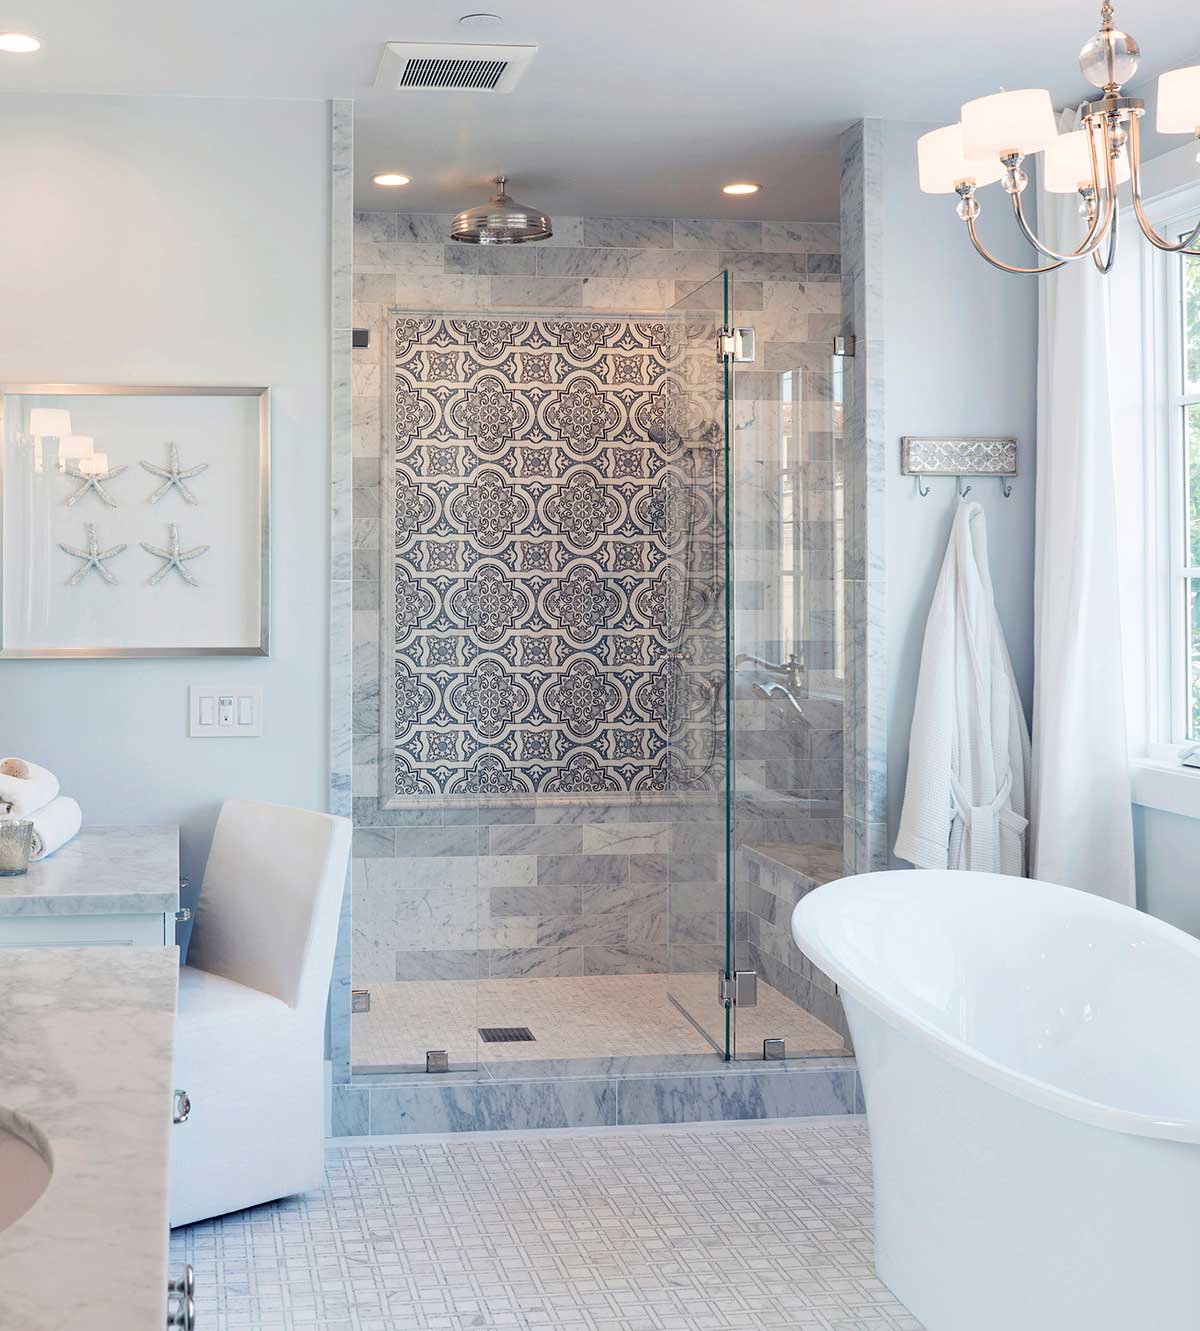 Decorative bathroom tile - Lena Winter Blue AST Shower cropped